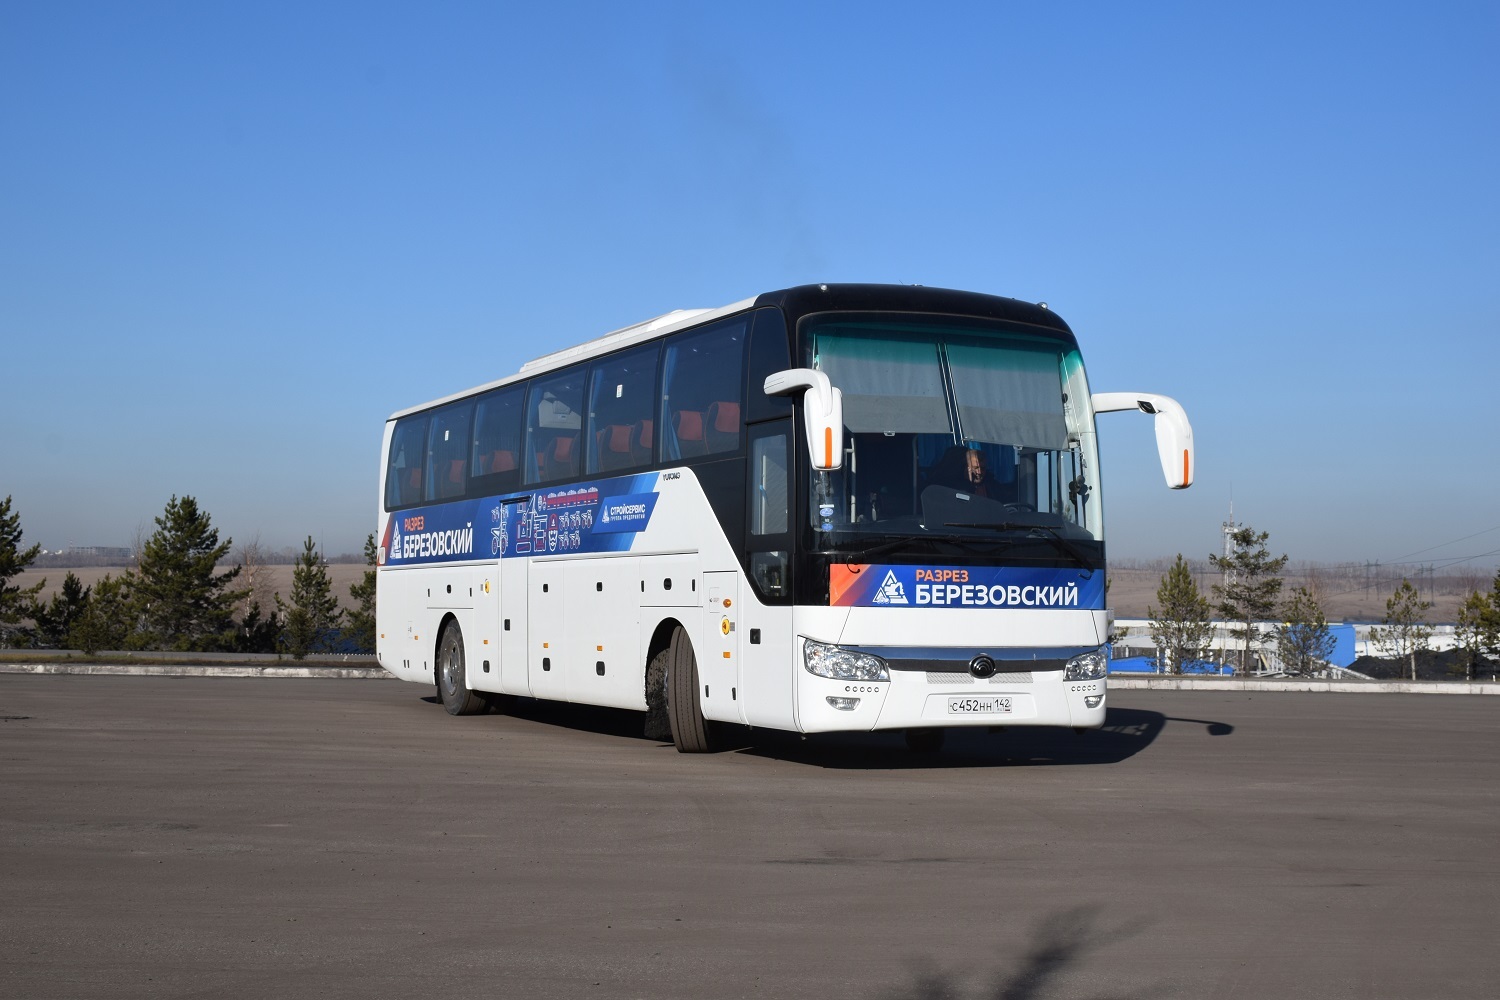 10-й автобус производства КНР поступил на разрезы Стройсервиса. Стройсервис